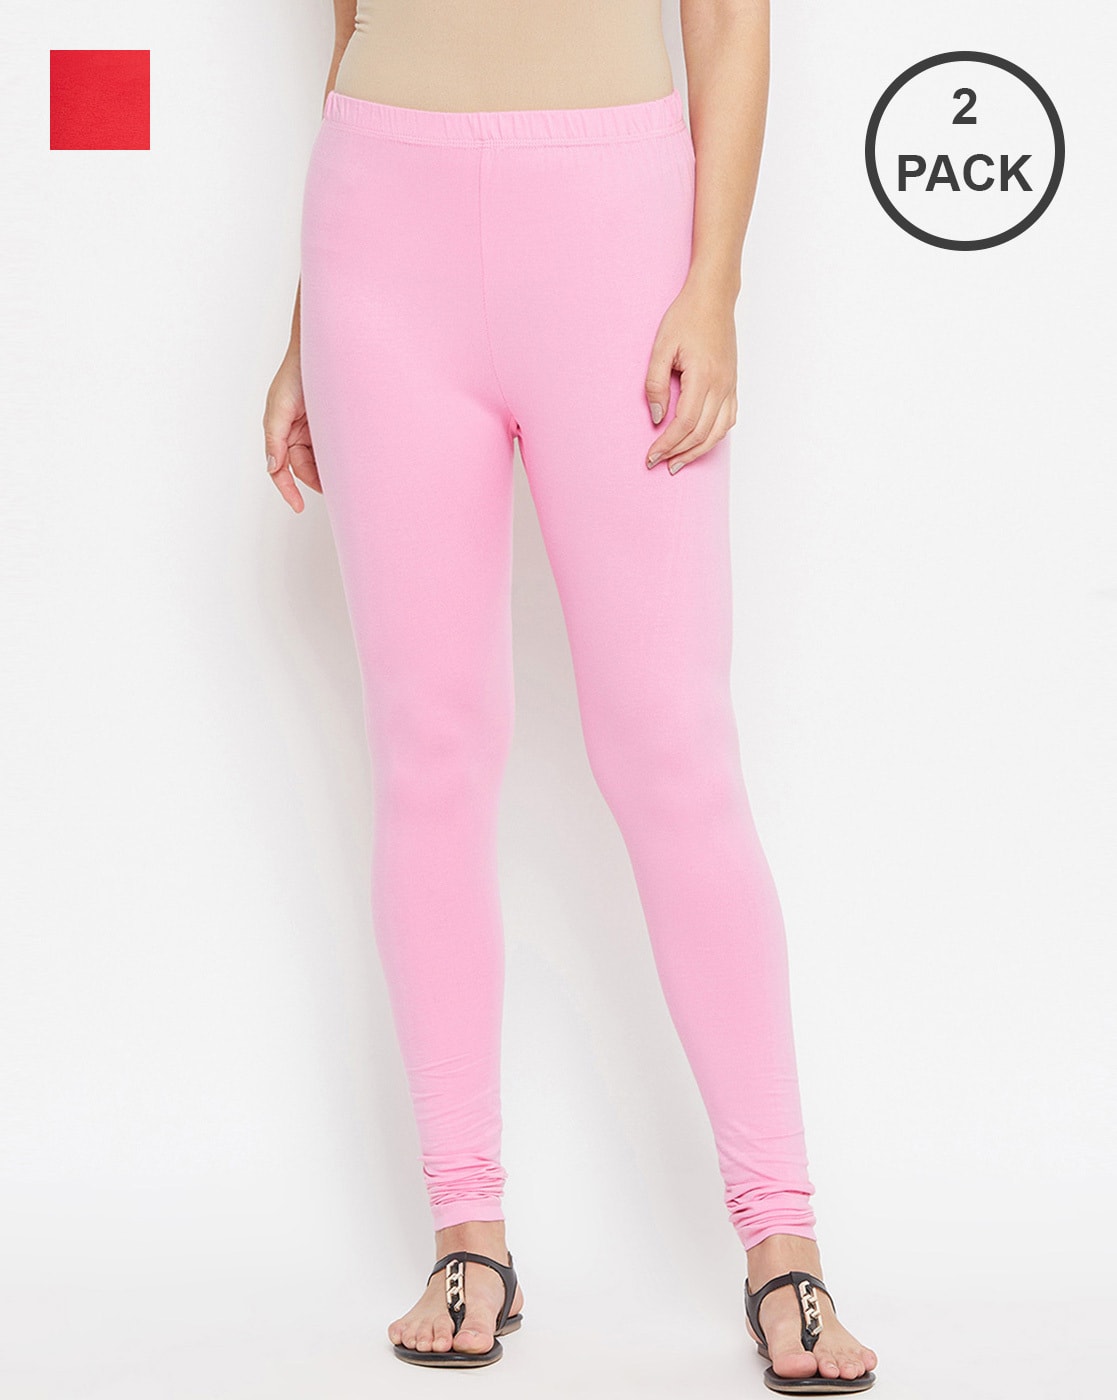 Buy Lyra Light Pink Churidar Leggings online-thanhphatduhoc.com.vn